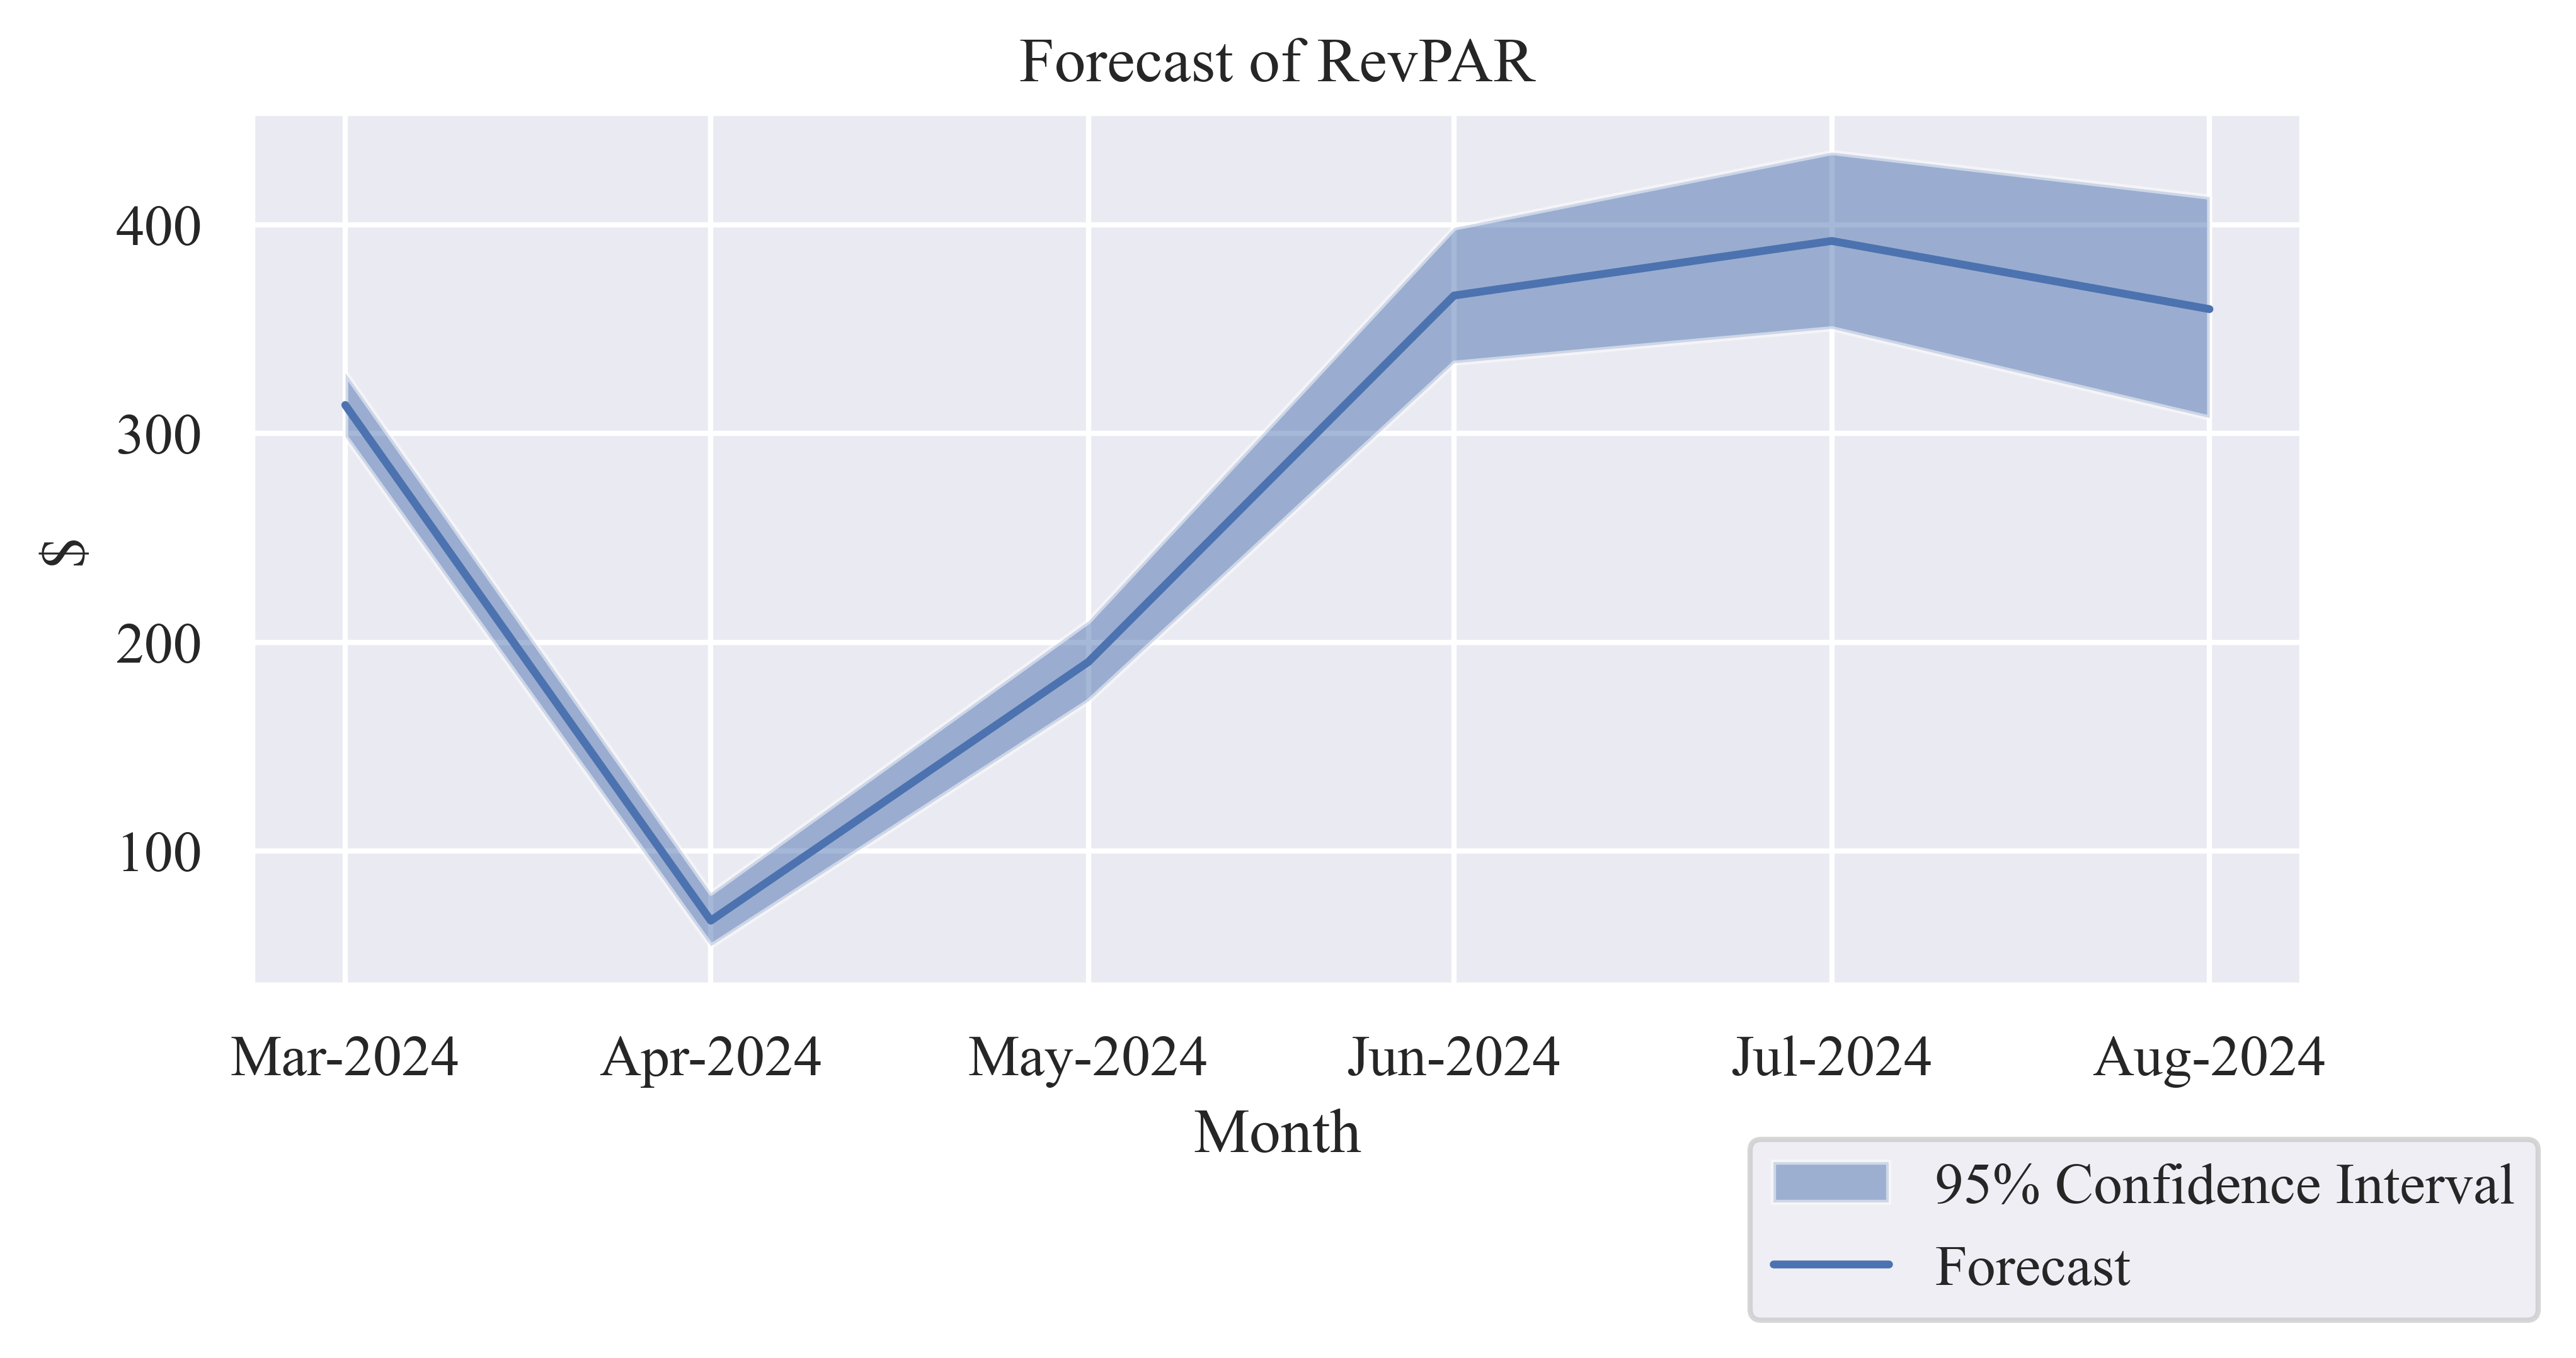 Table 3: Forecast of Monthly RevPAR